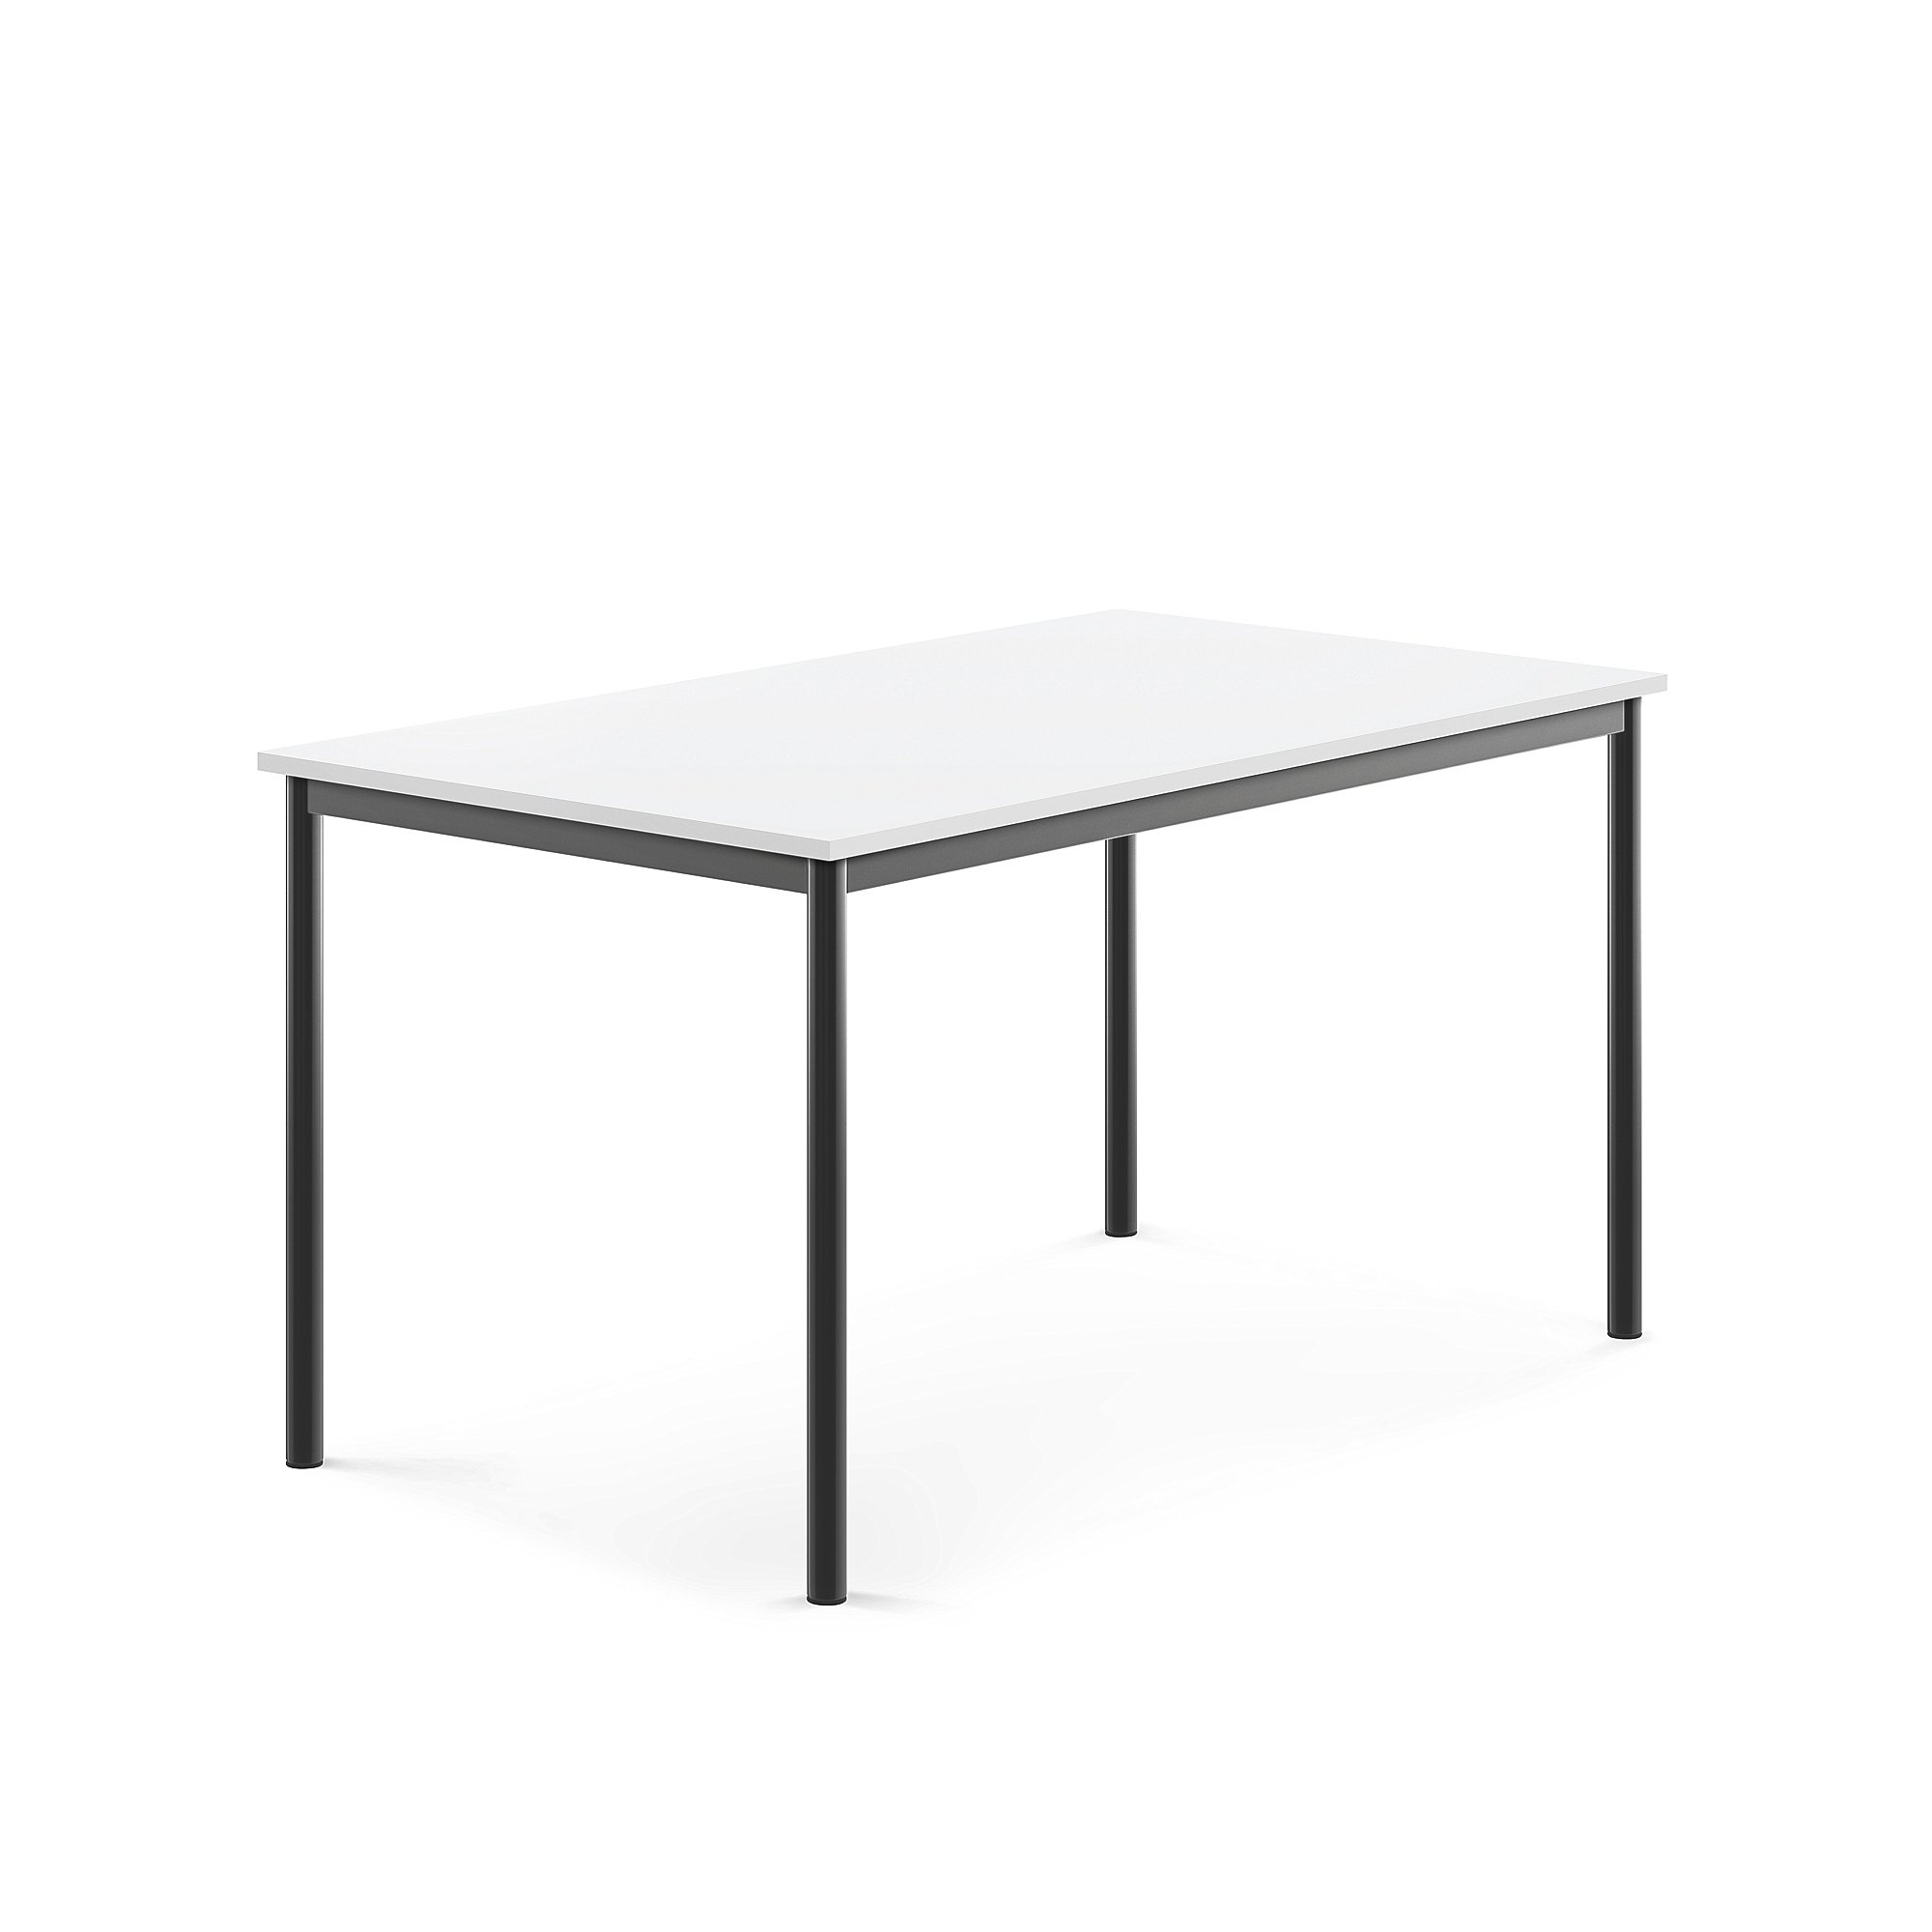 Stůl BORÅS, 1400x800x720 mm, antracitově šedé nohy, HPL deska, bílá